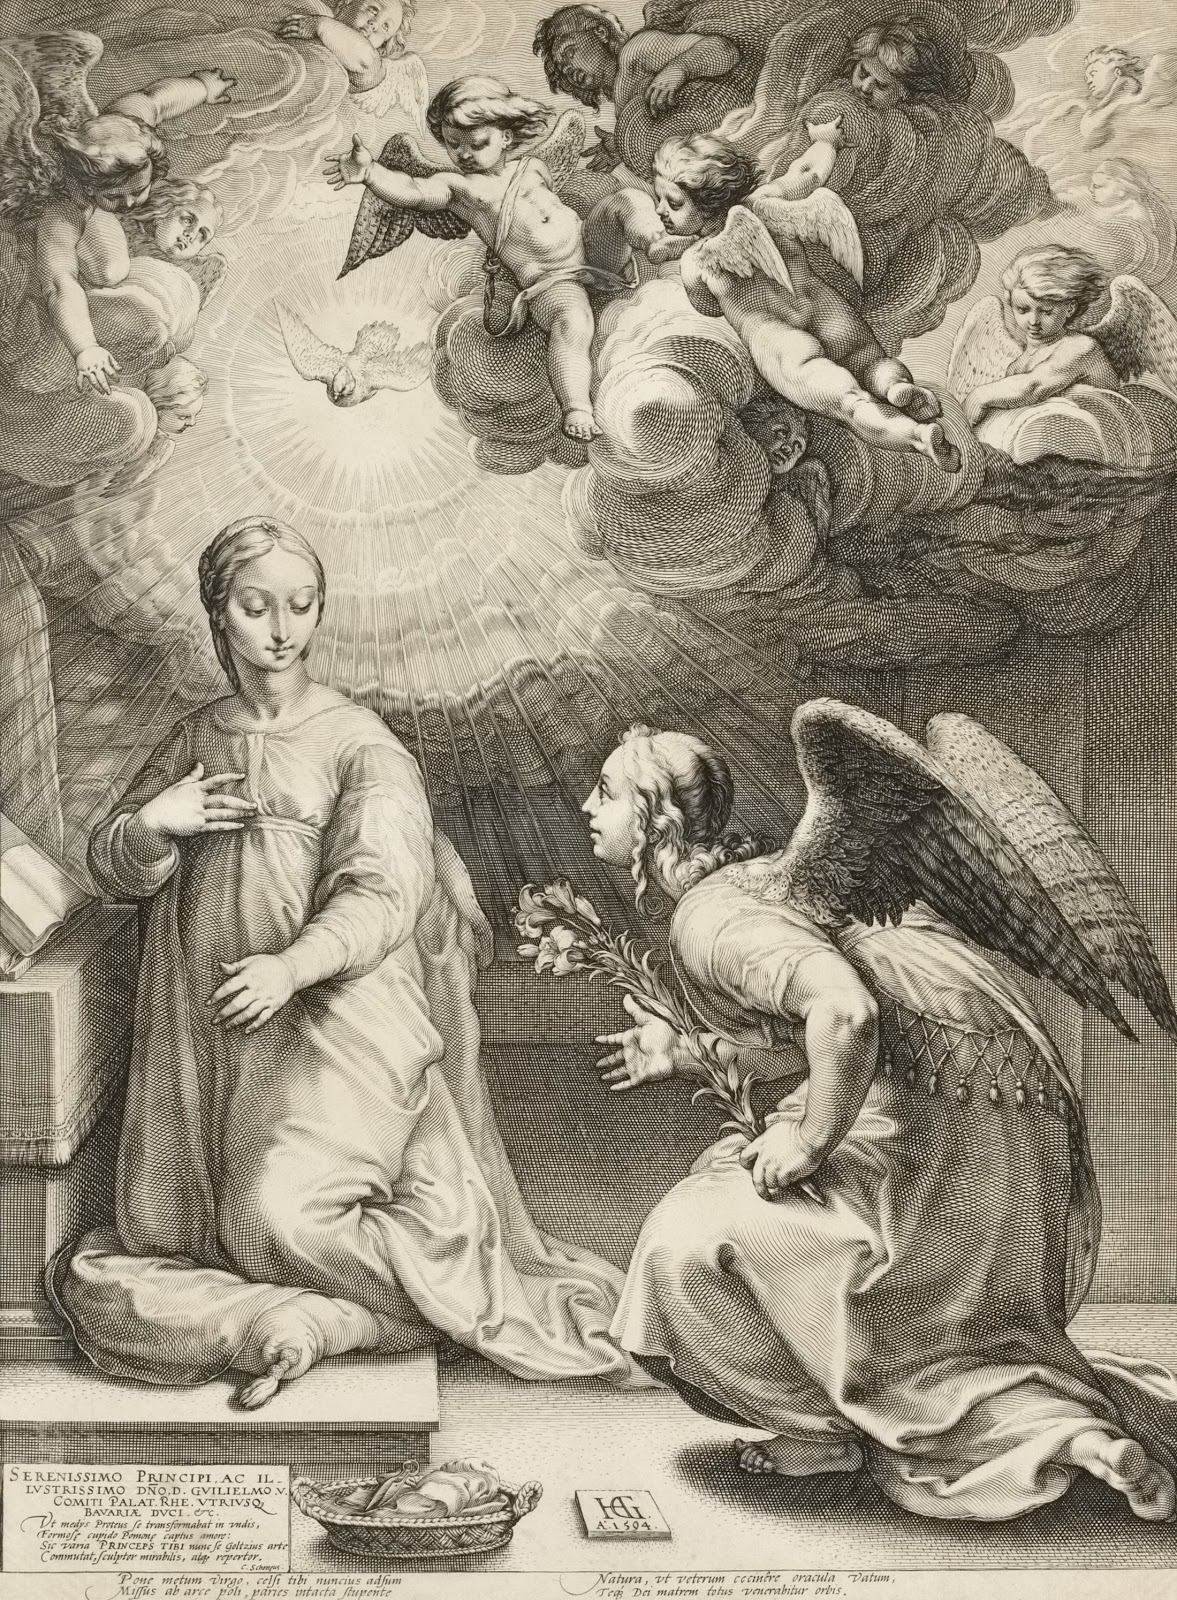 Hendrick+Goltzius-1558-1617 (30).jpg